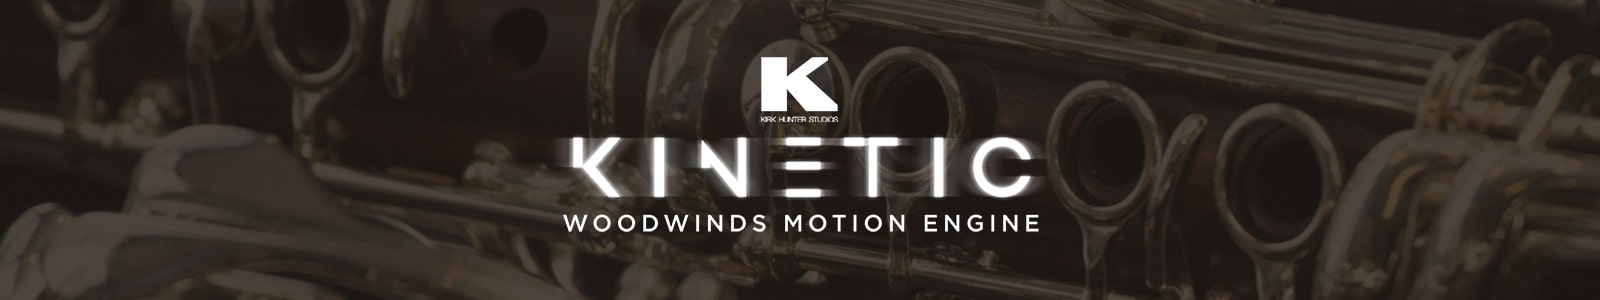 Kinetic Woodwinds Motion Engine by Kirk Hunter Studios